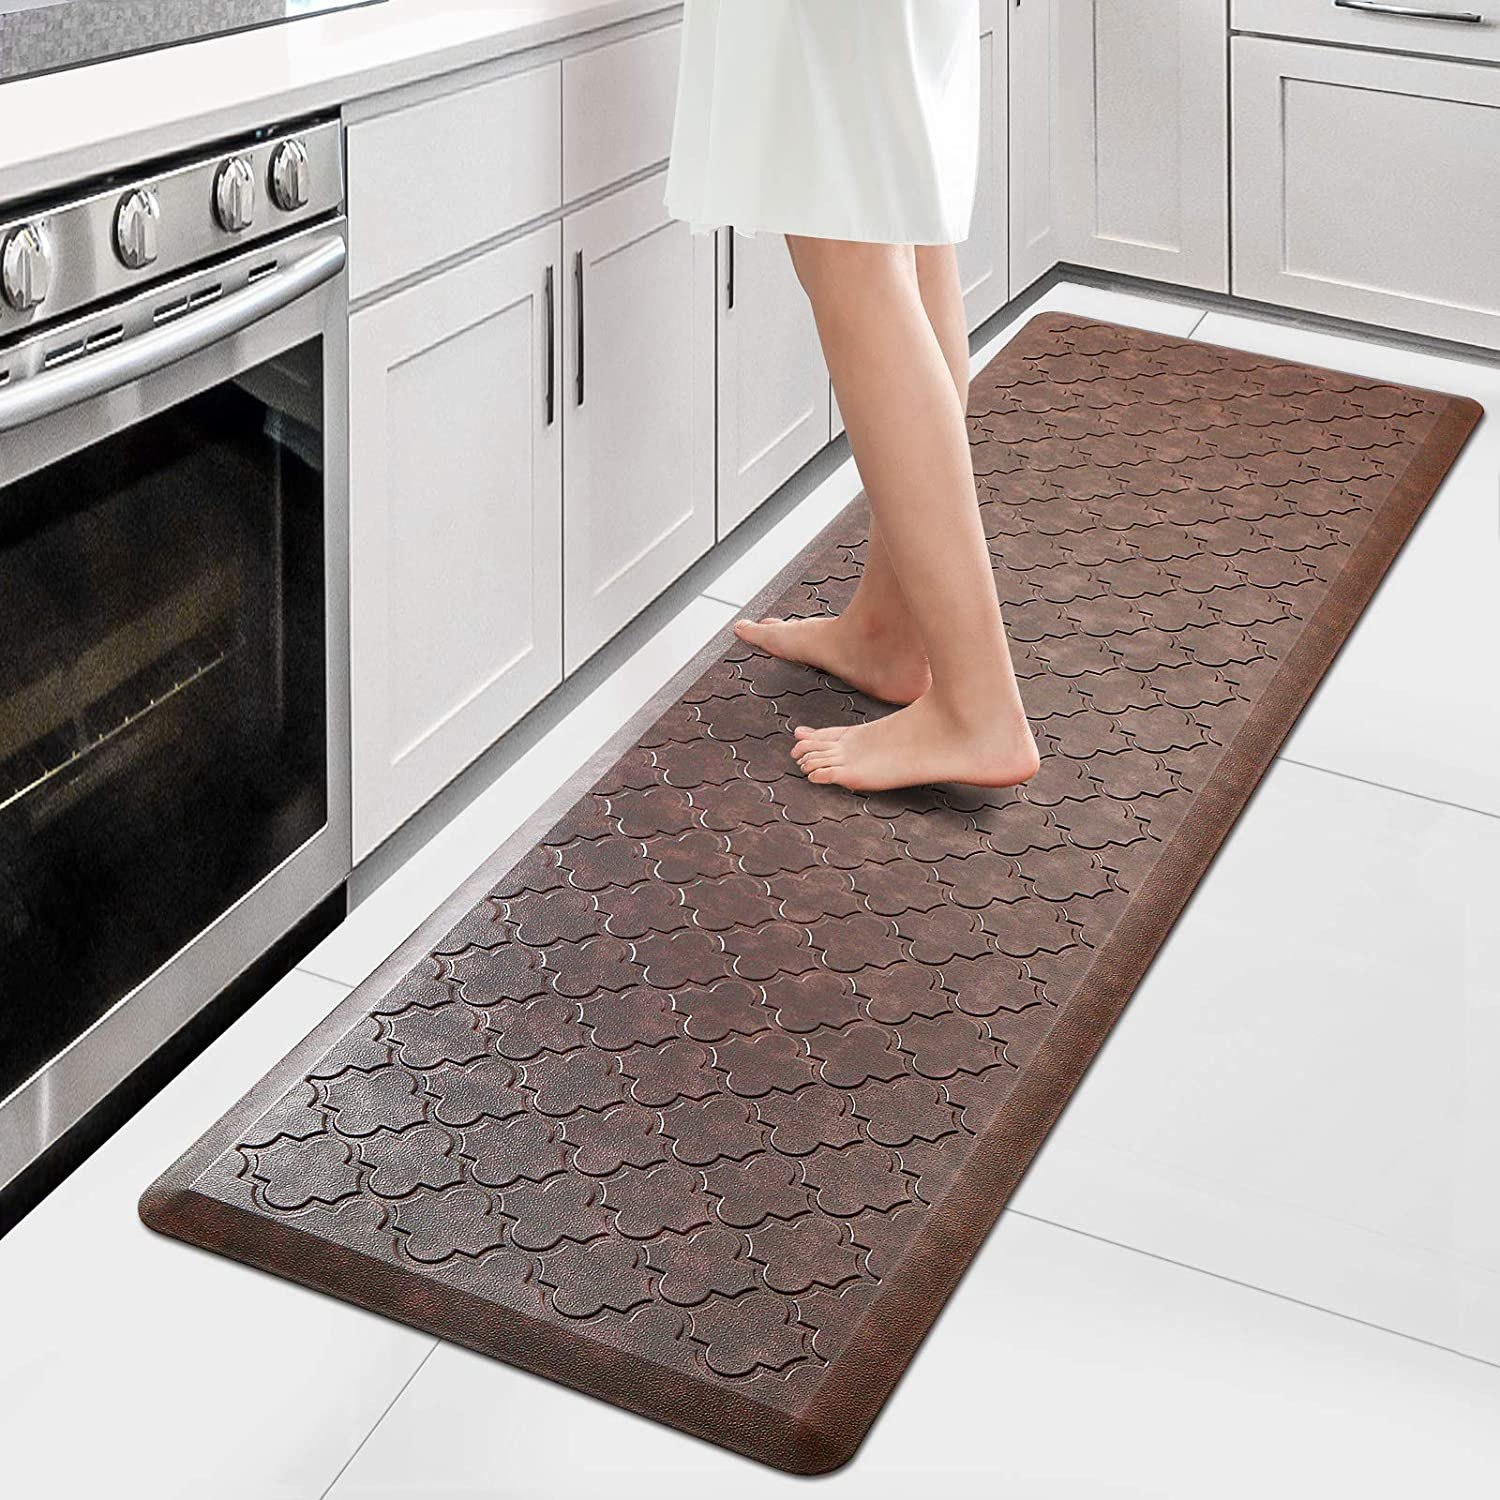 Sky Solutions Oasis Anti Fatigue Mat - Cushioned 3/4 Inch Comfort Floor Mats